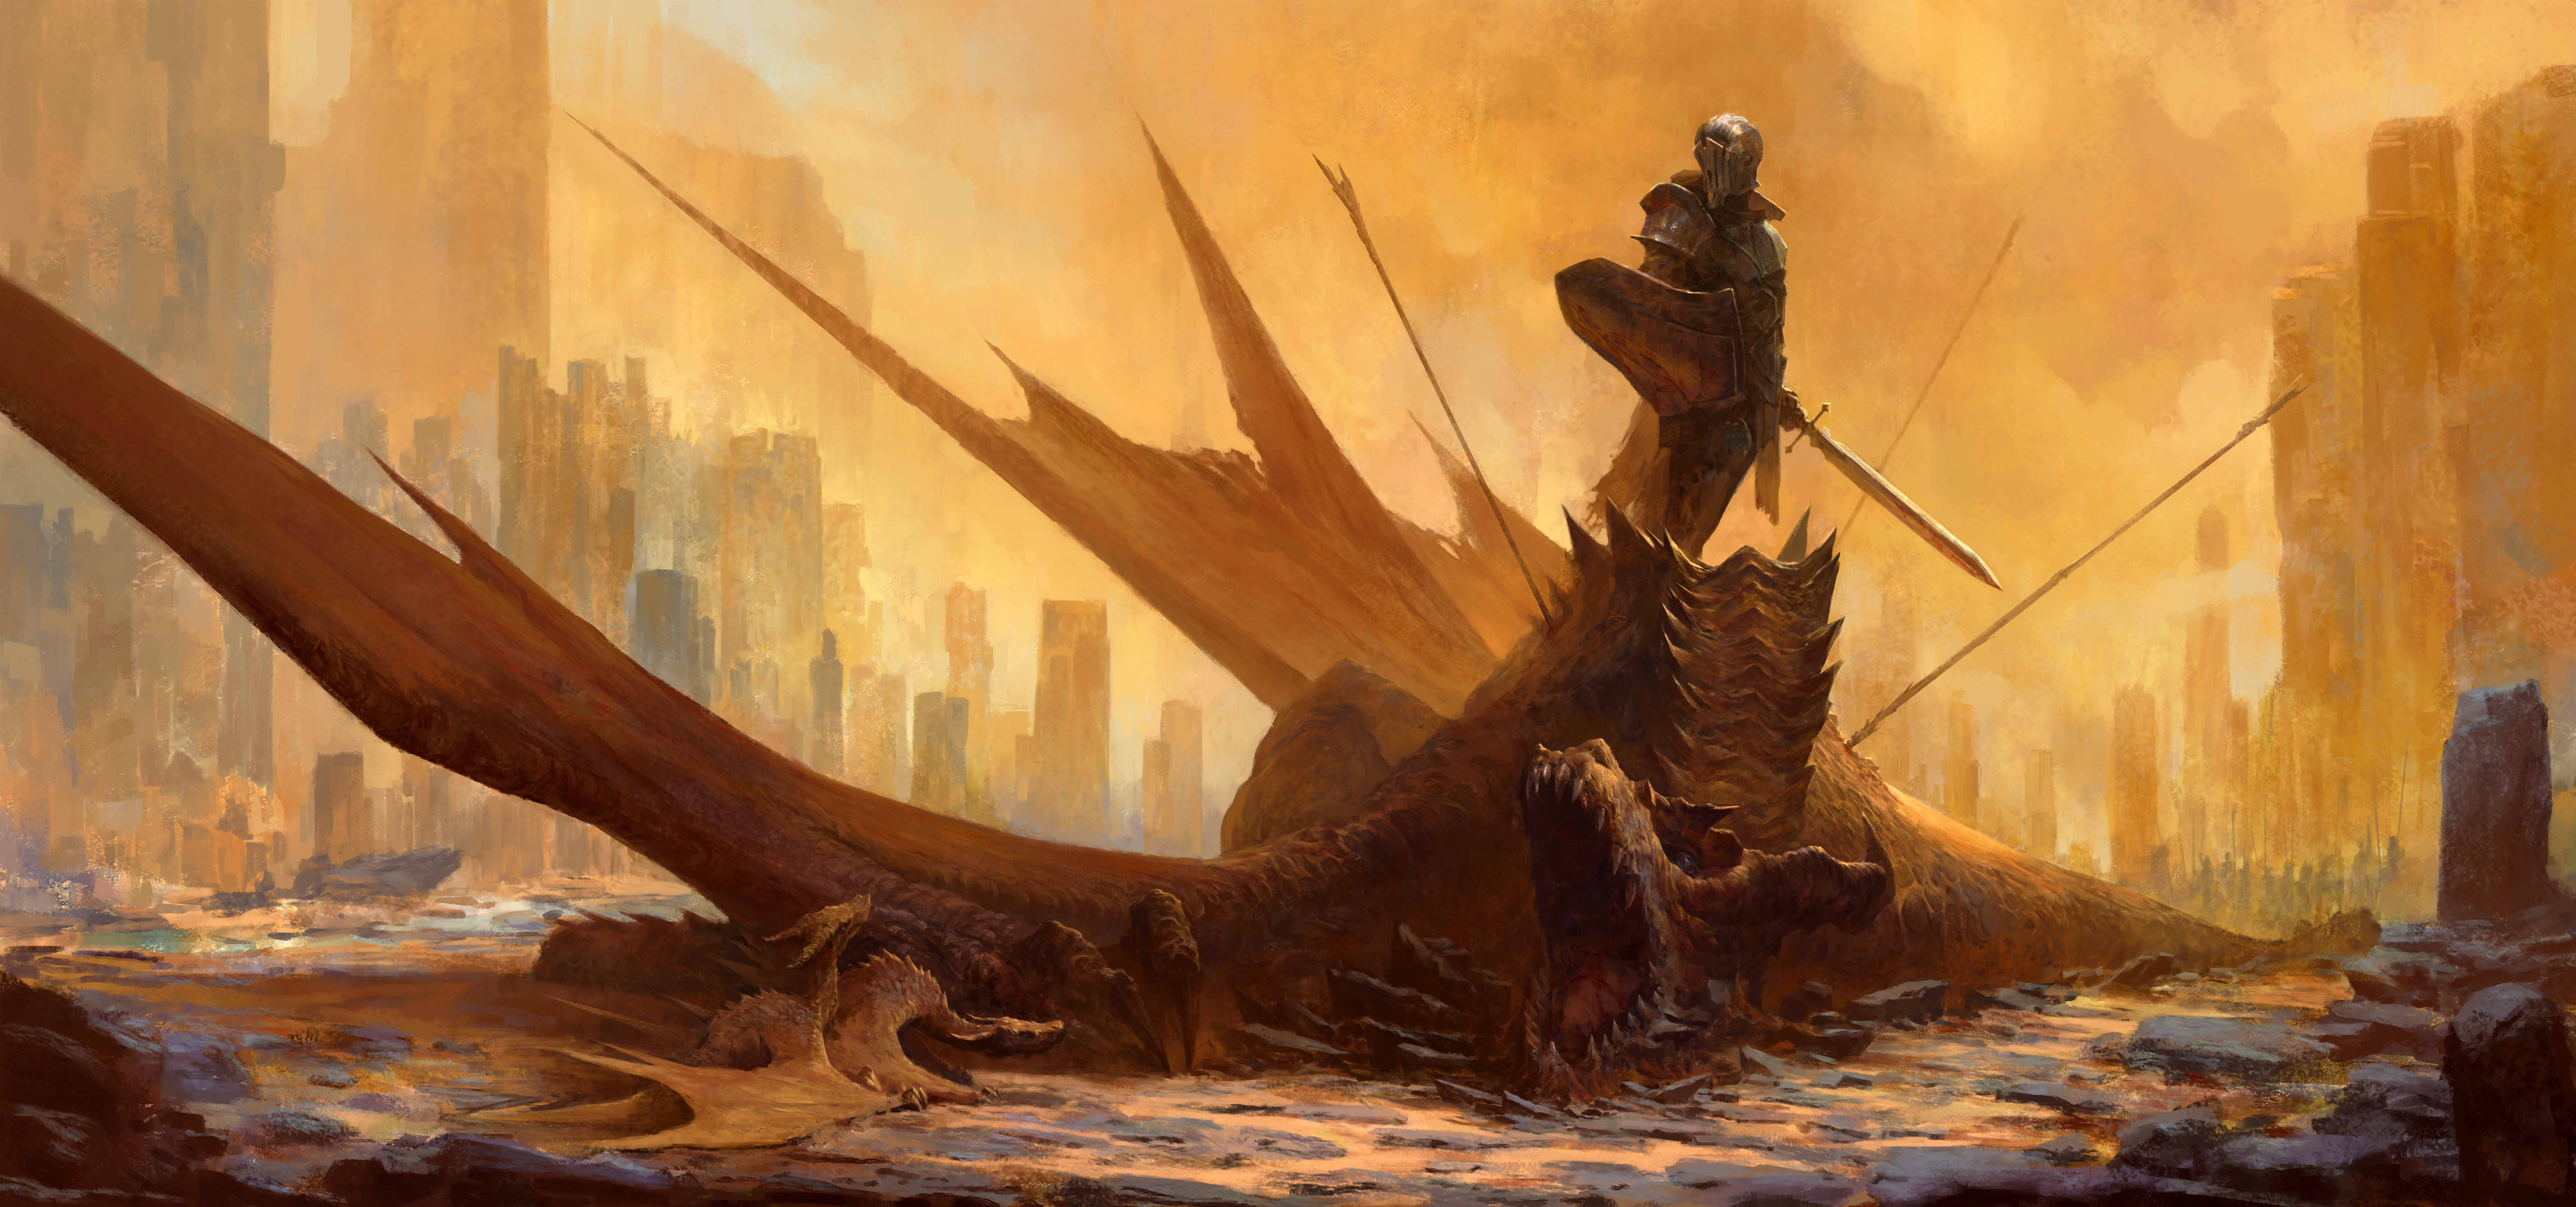 General 3840x1799 fantasy art artwork dragon knight